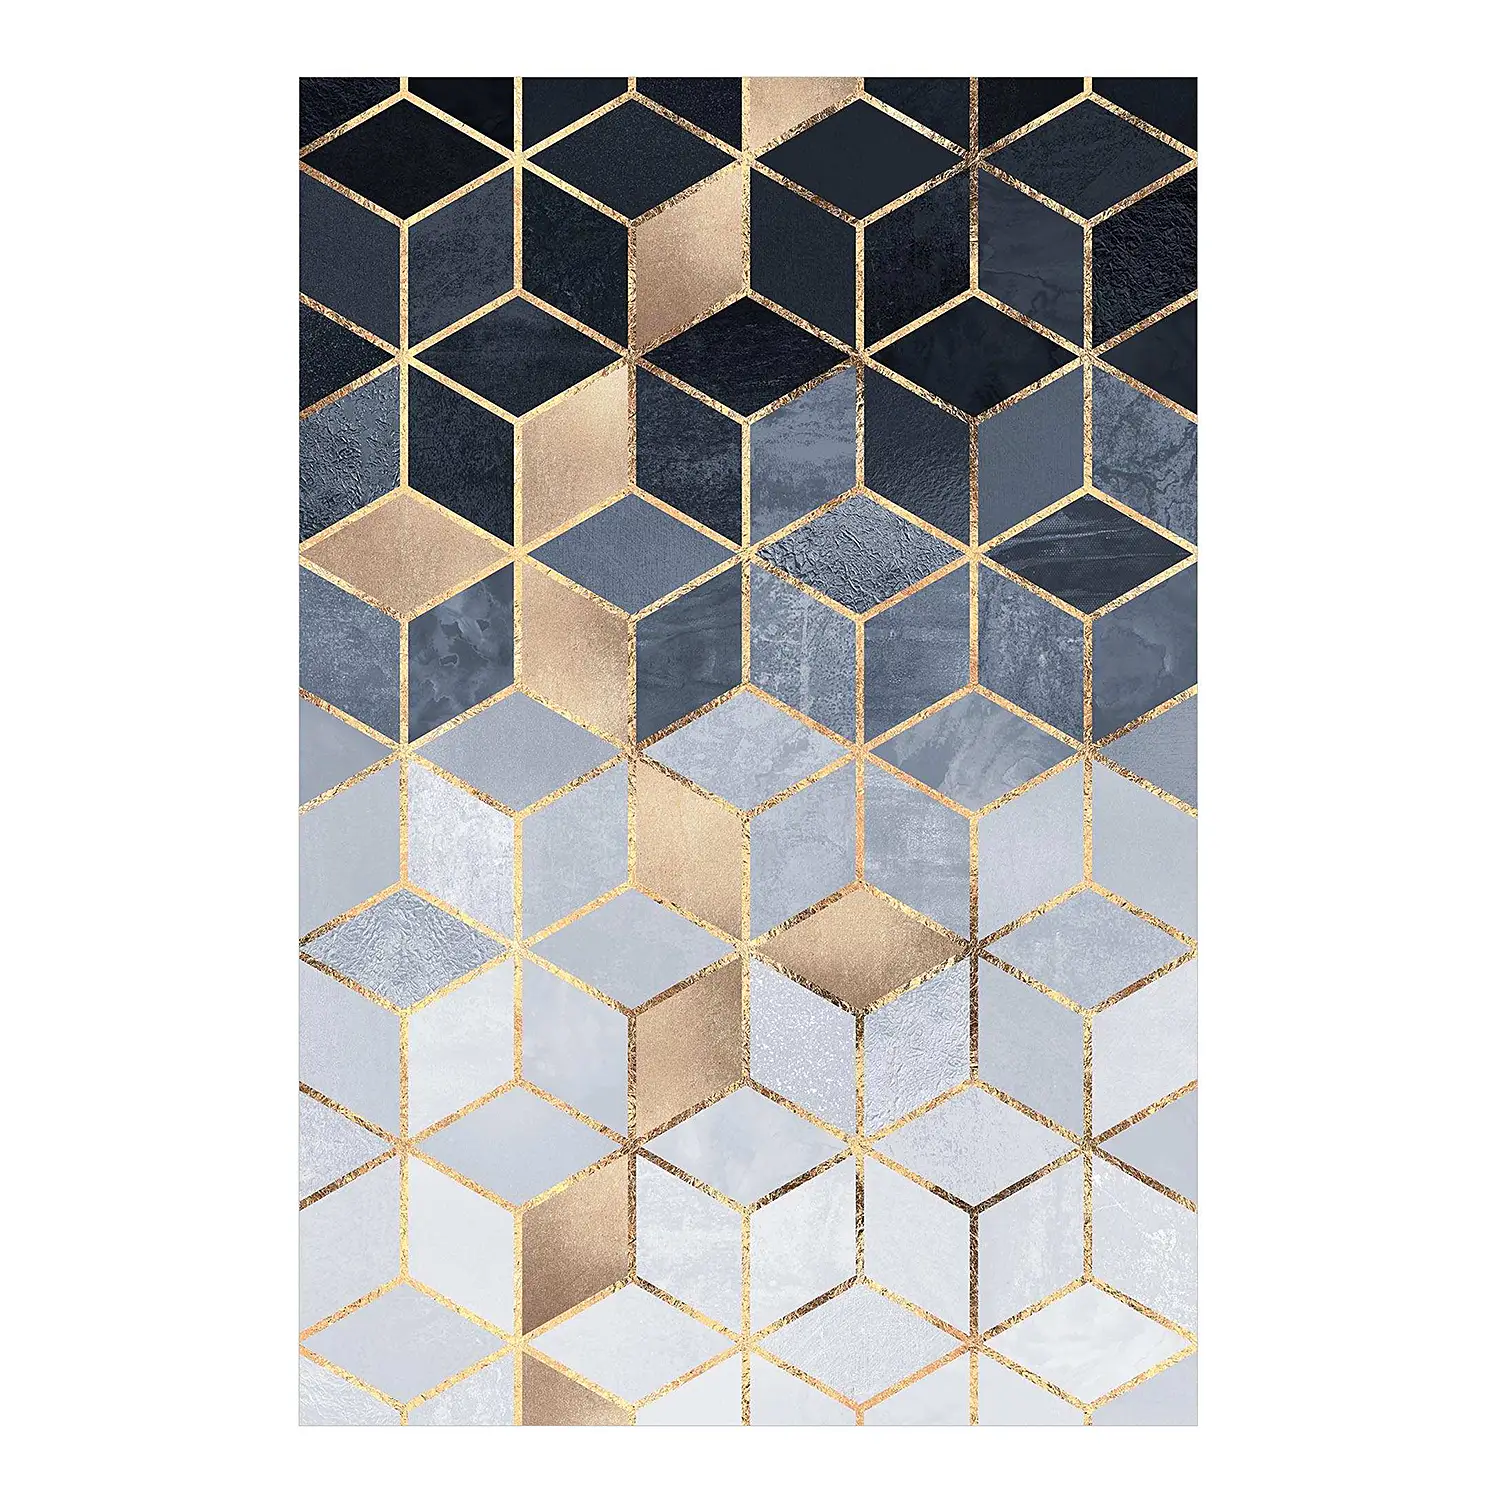 Vinylteppich Blau Wei脽 Goldene Geometrie